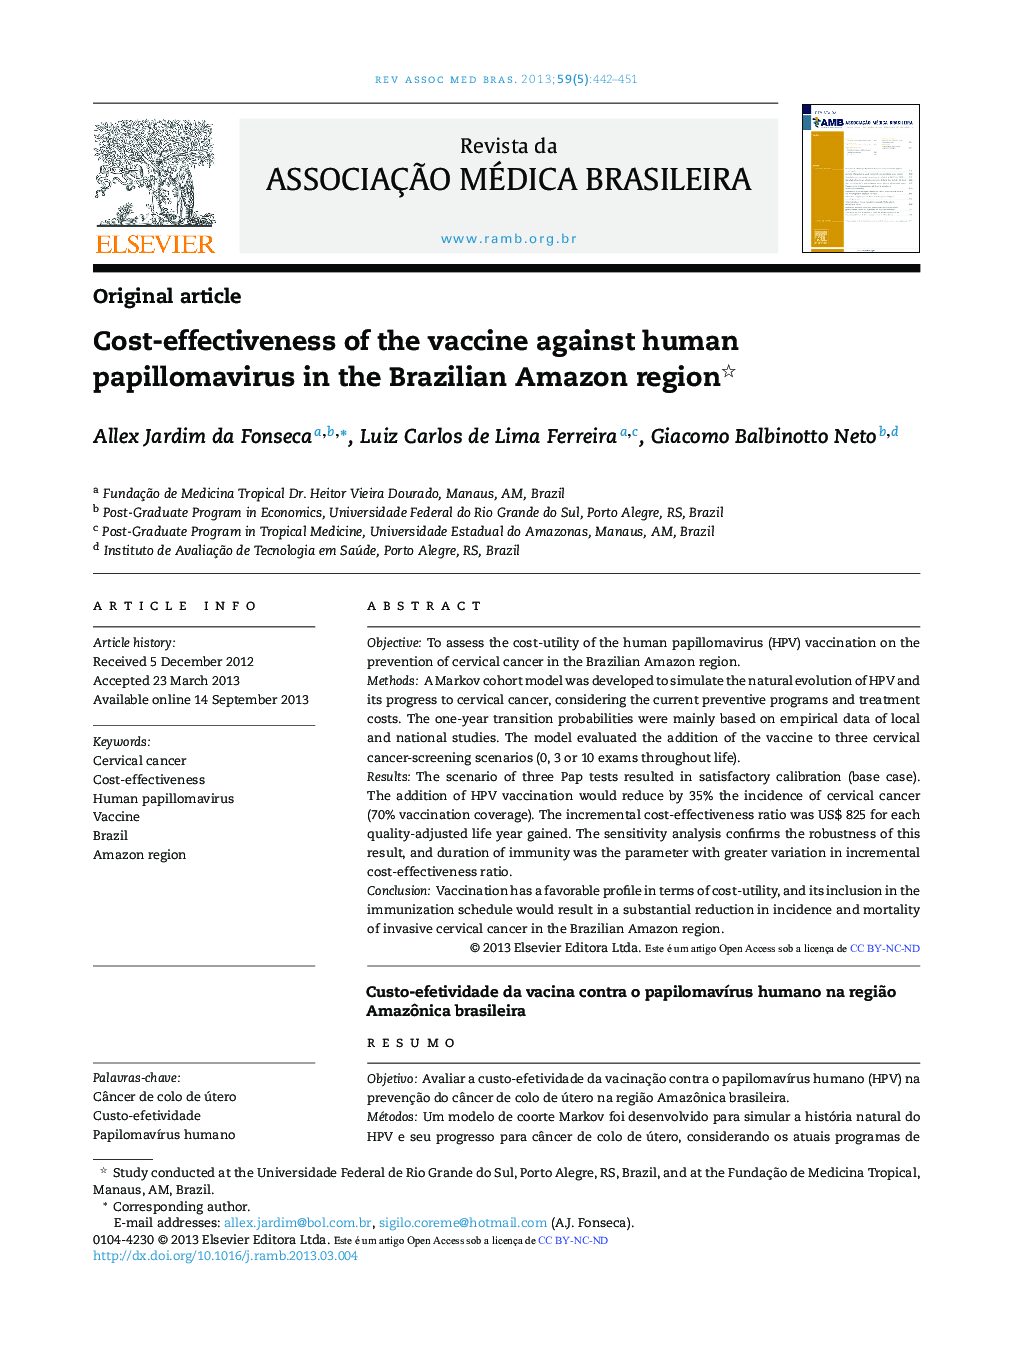 Cost-effectiveness of the vaccine against human papillomavirus in the Brazilian Amazon region 